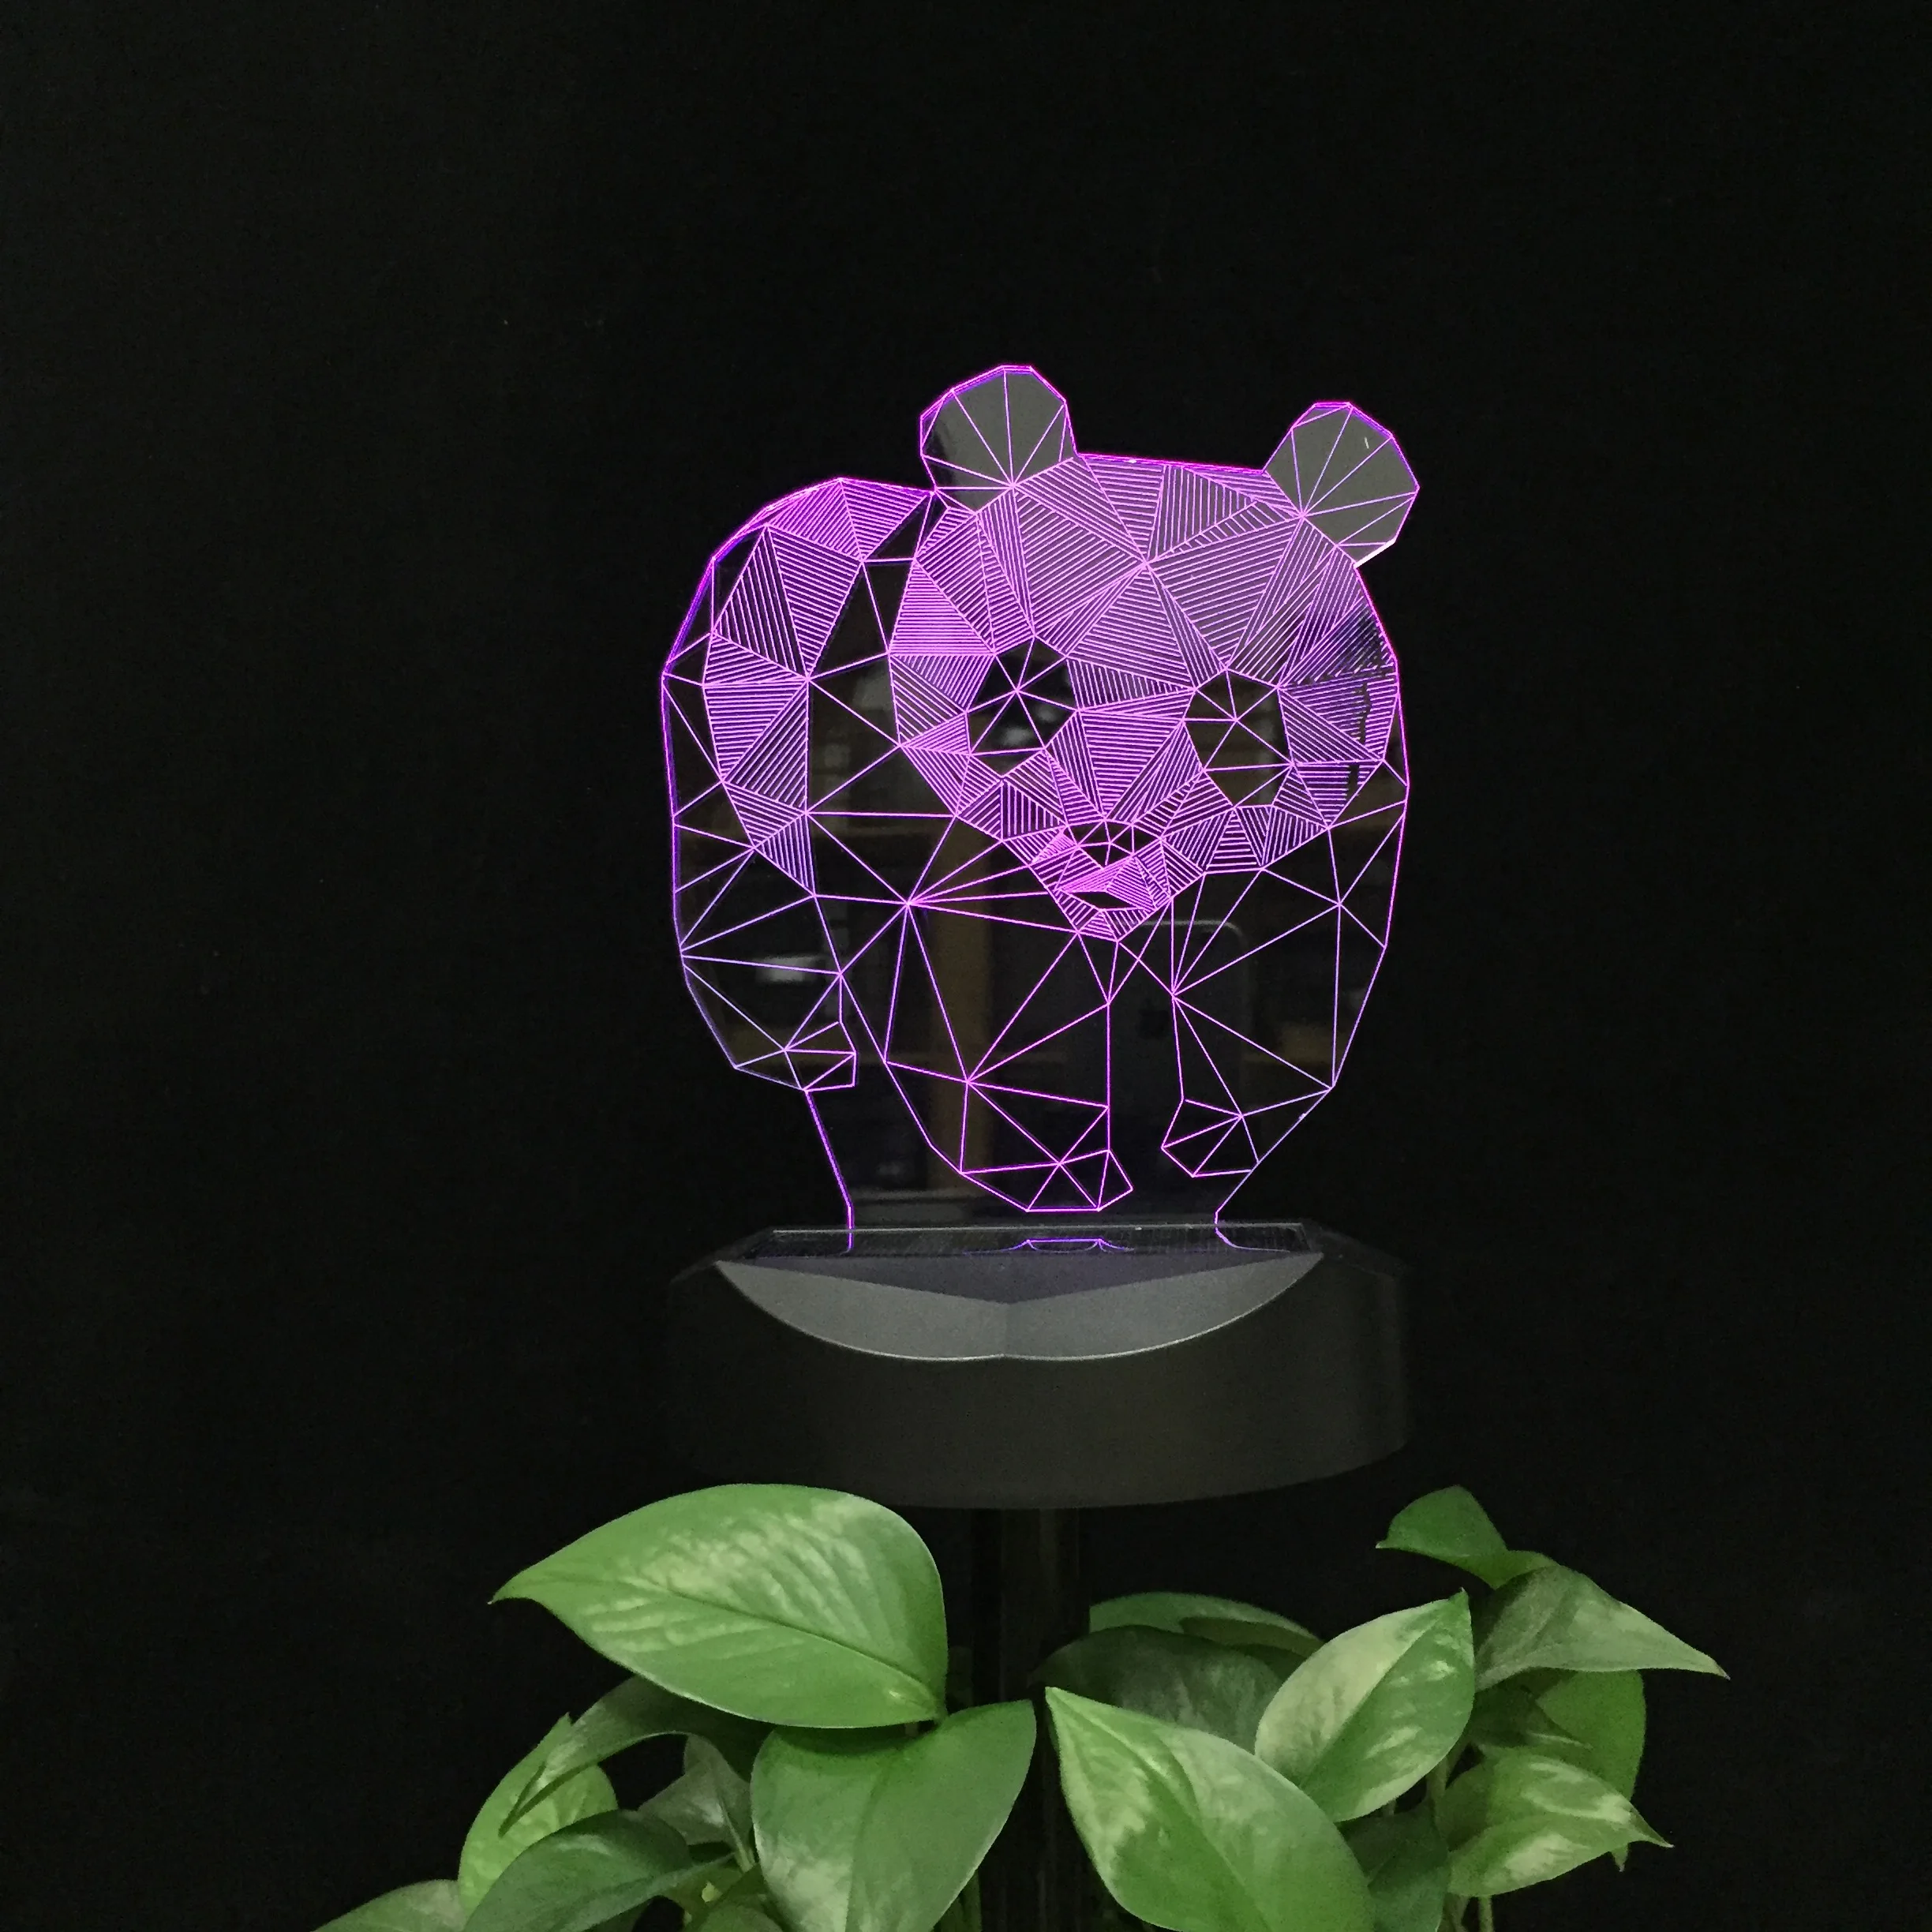 Panda Solar Powered 3D LED Night Lamp Waterproof Landscape Lighting Outdoor Animal Garden Light for Yard Holiday Birthday Gift